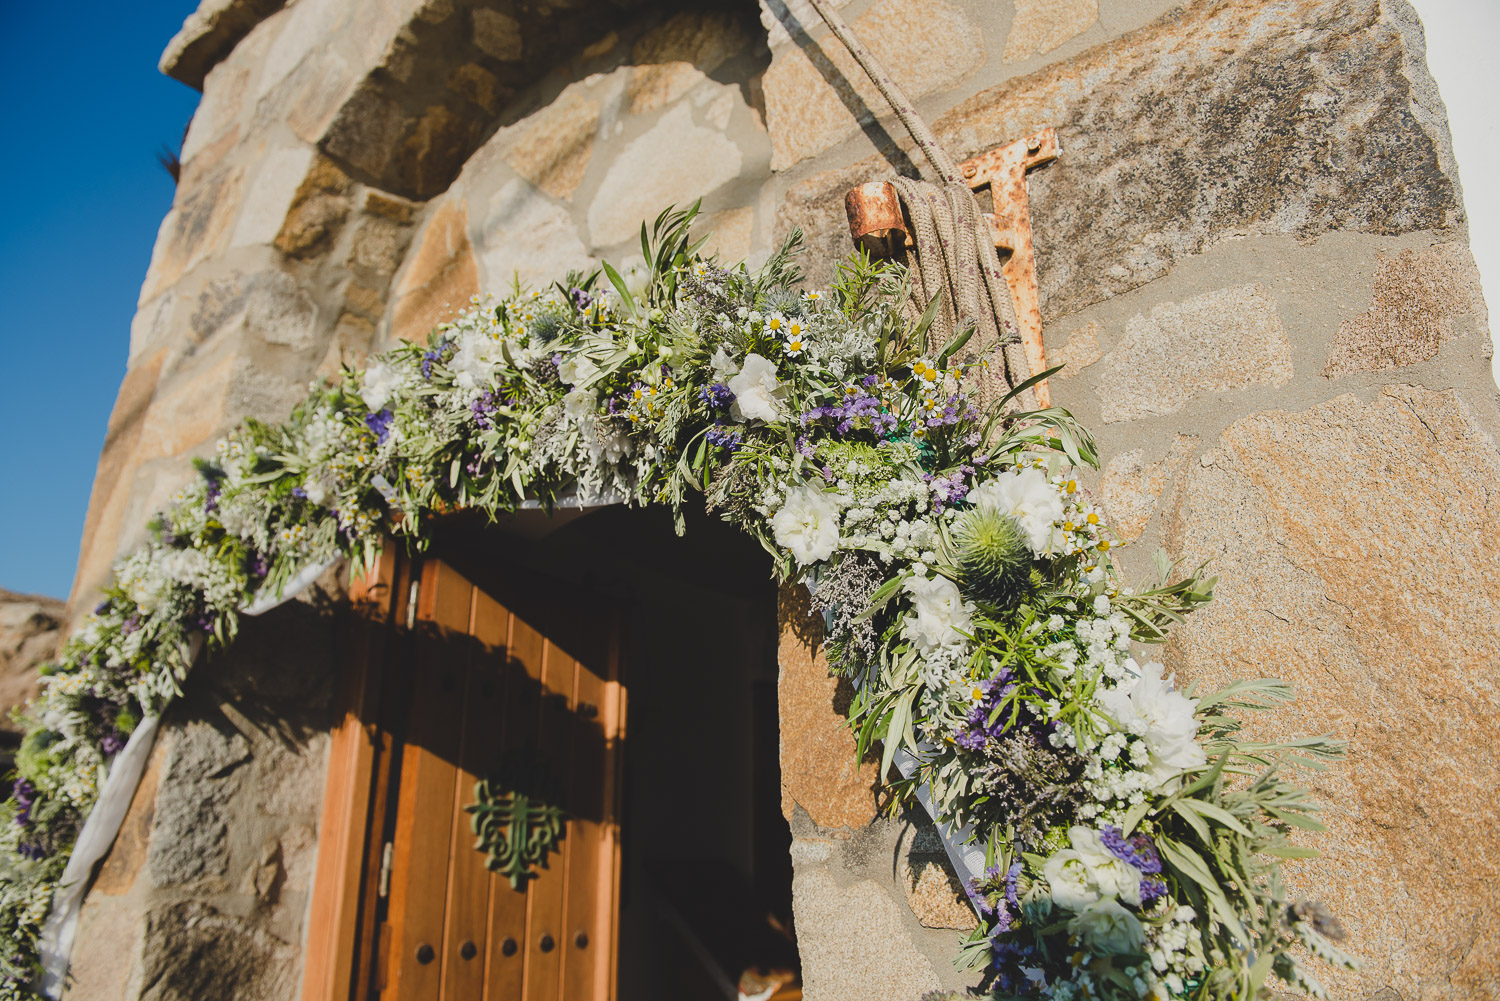 Wedding photographer Mykonos: church entrance adorned in wild flowers at Mykonos wedding.